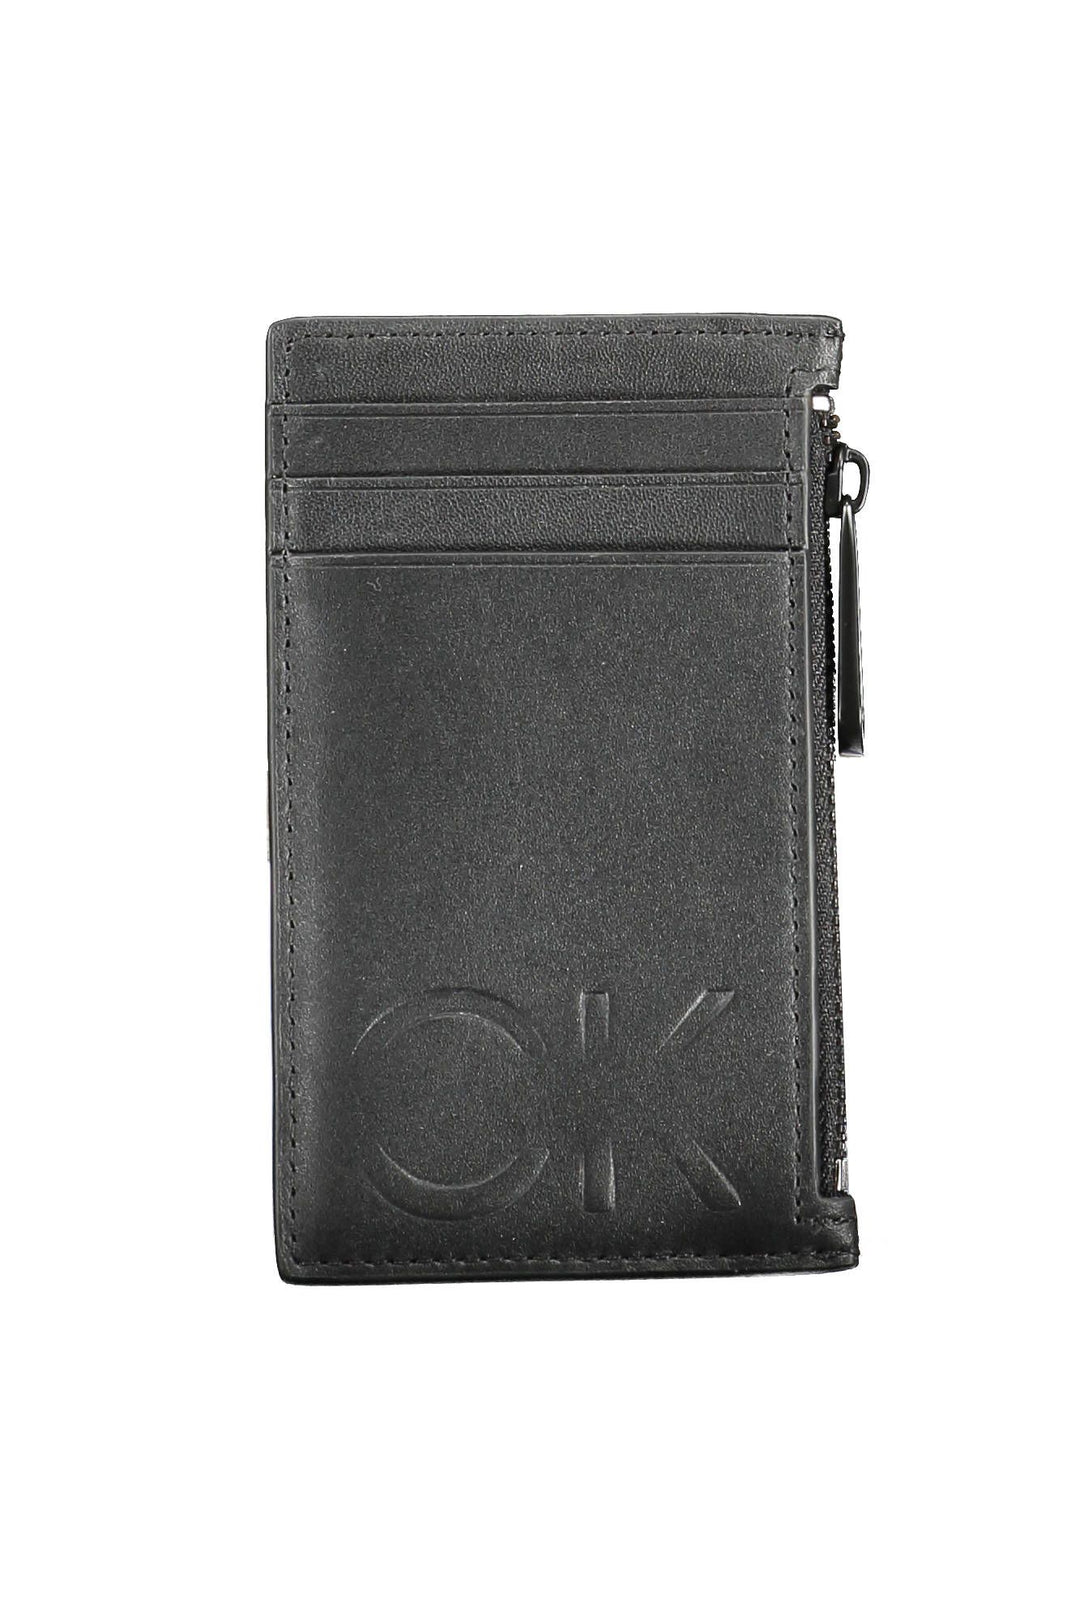 Calvin Klein Sleek Leather Zip Wallet in Timeless Black